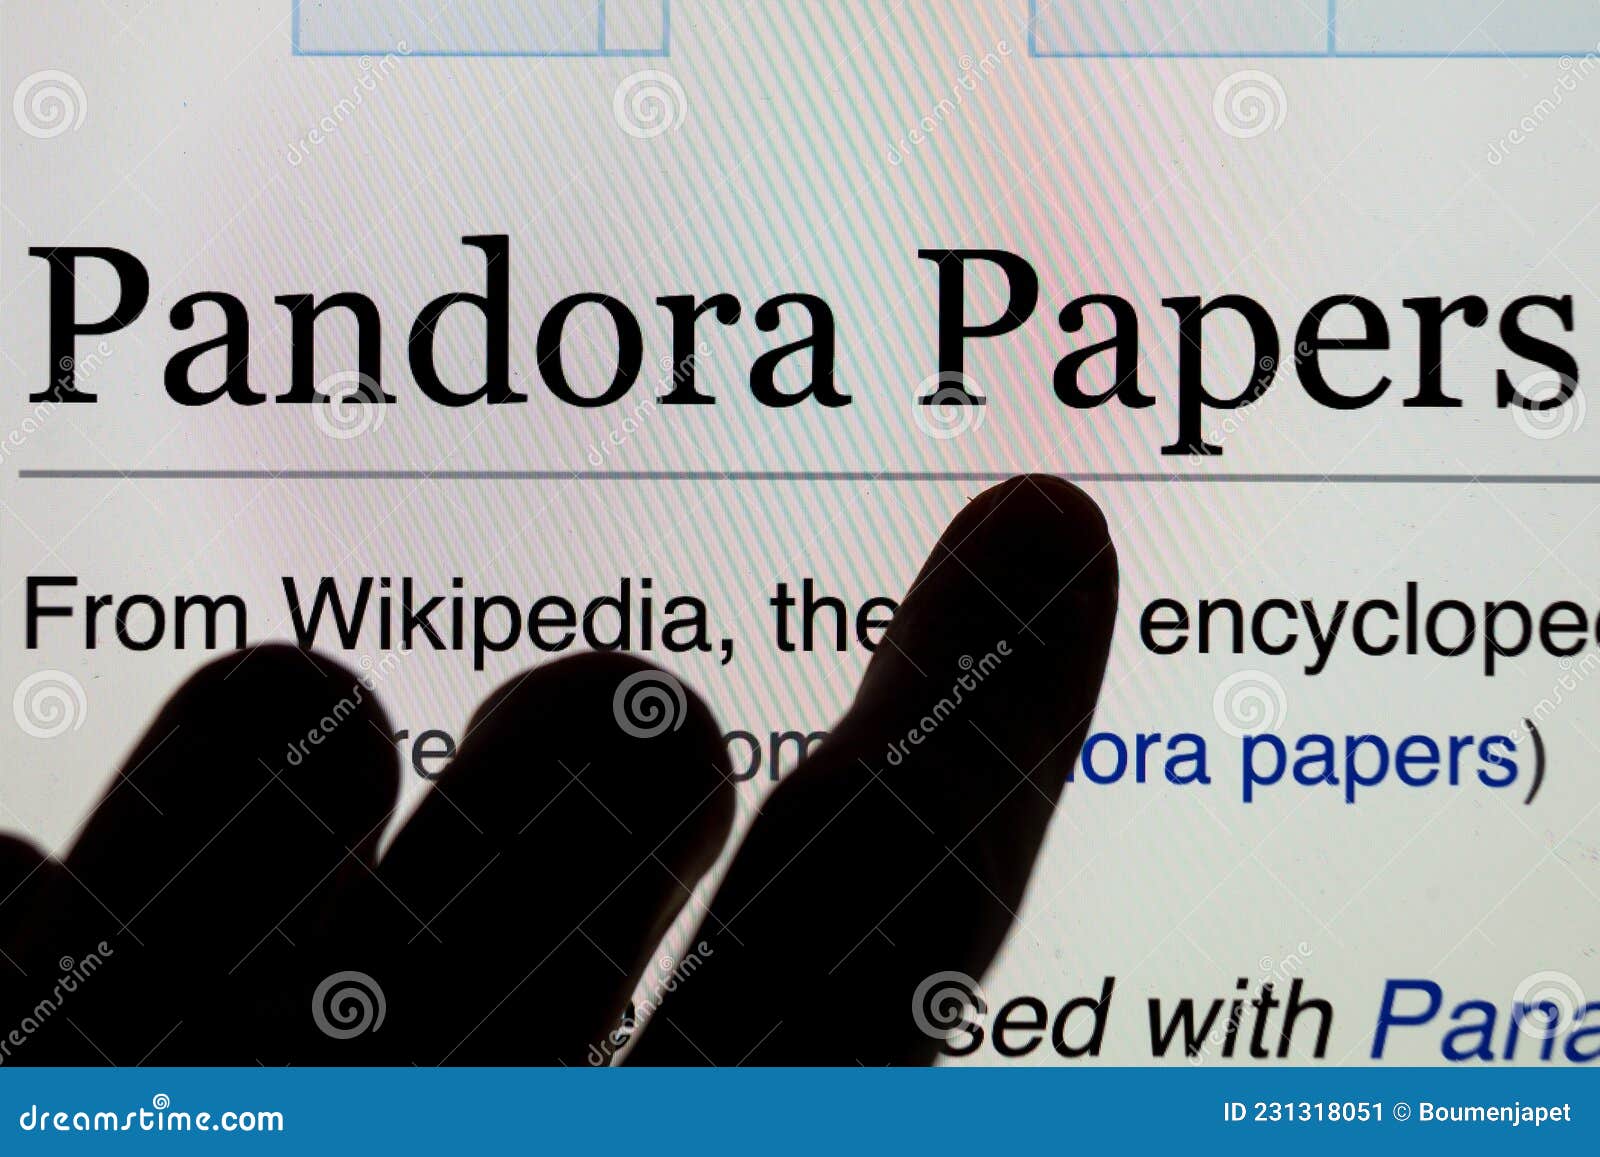 Electronic paper - Wikipedia